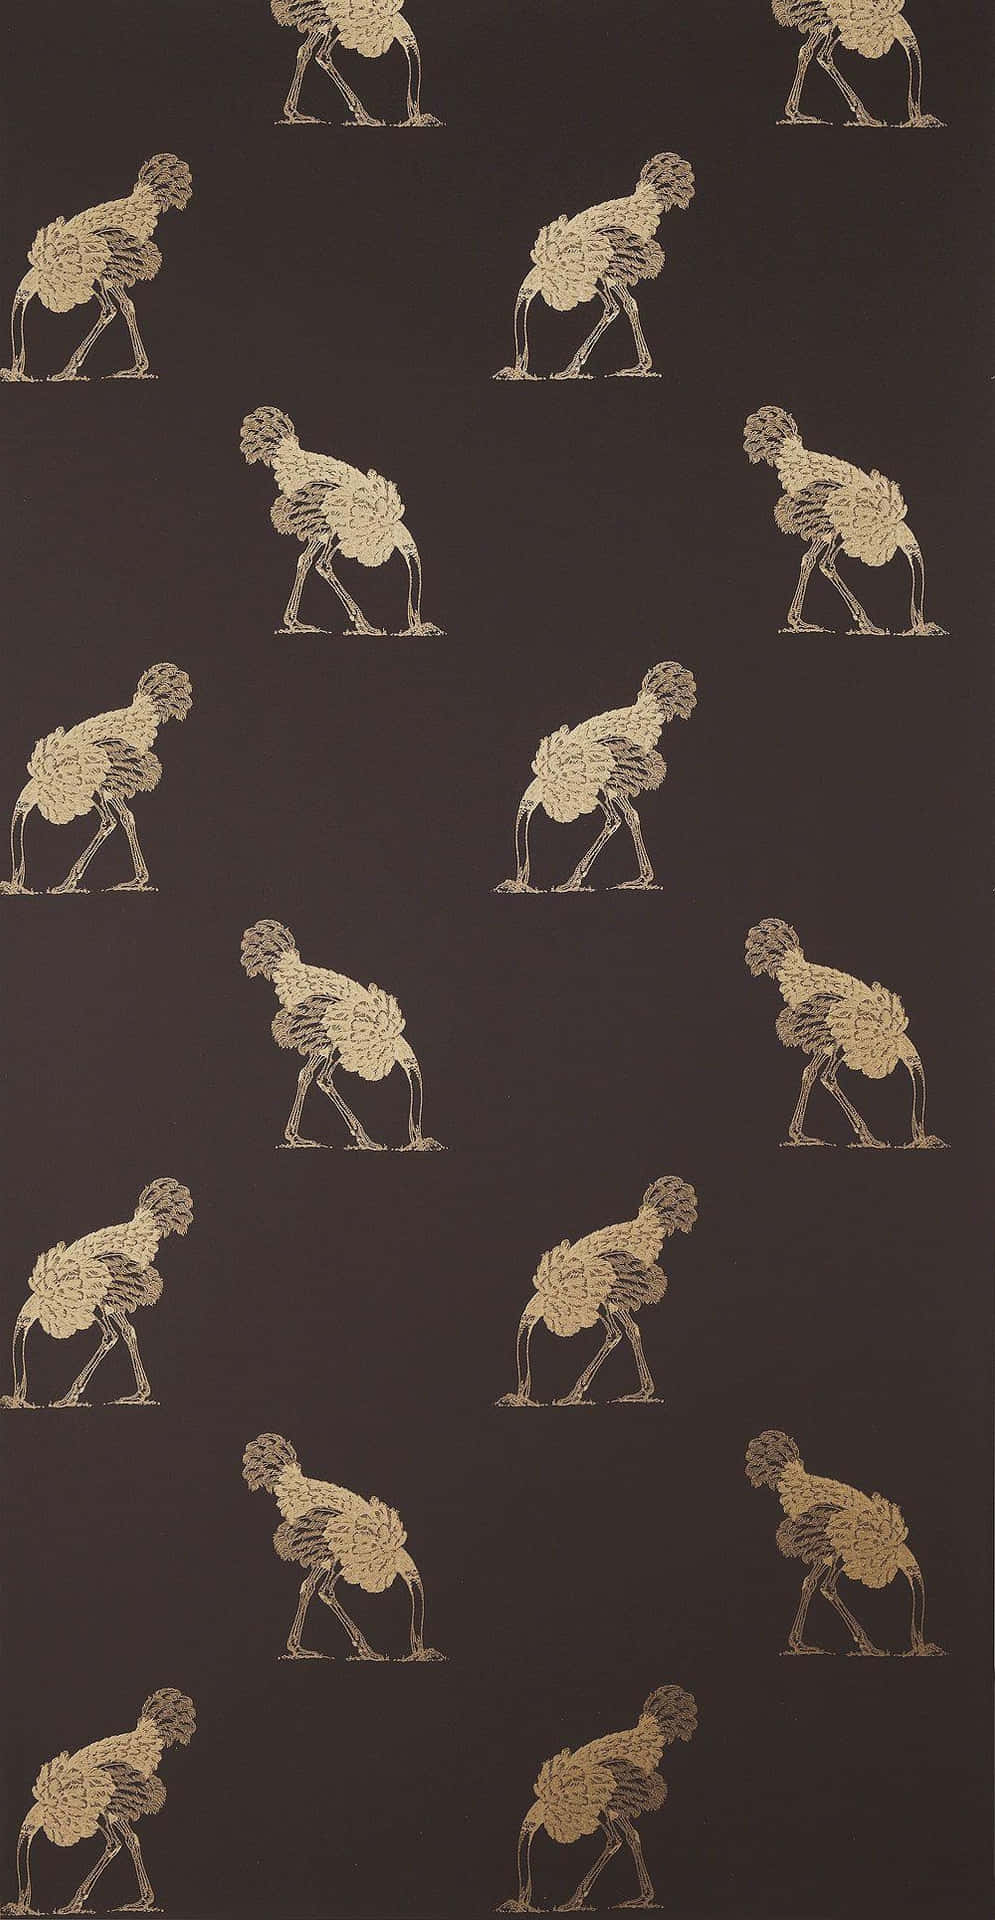 Ostrich Motion Sequence Pattern Wallpaper